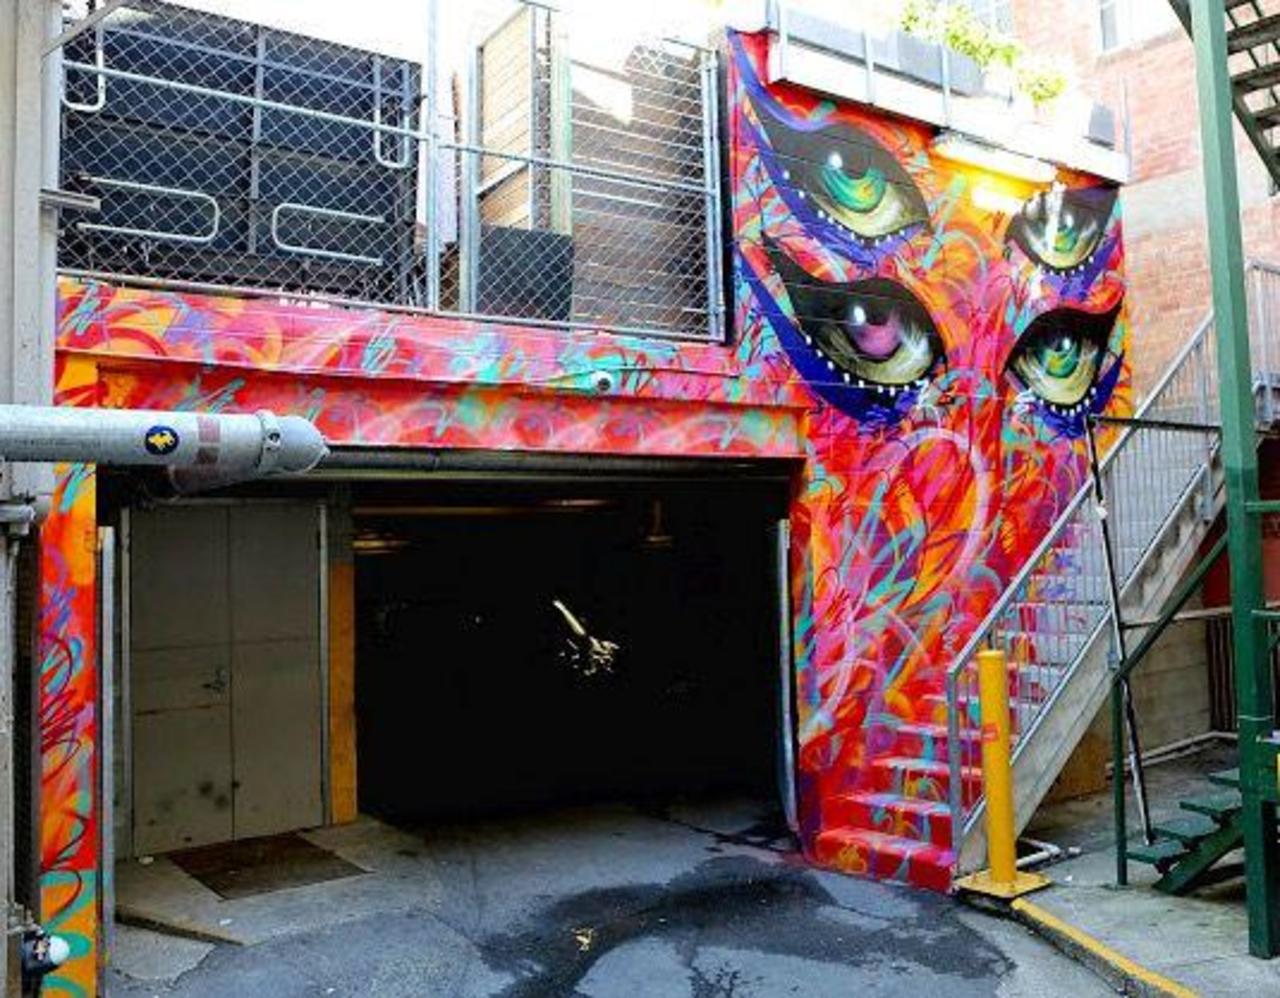 Obra de Madsteez en Sydney, Australia #streetart #art #australia #graffiti http://t.co/X4oLKhkJmS